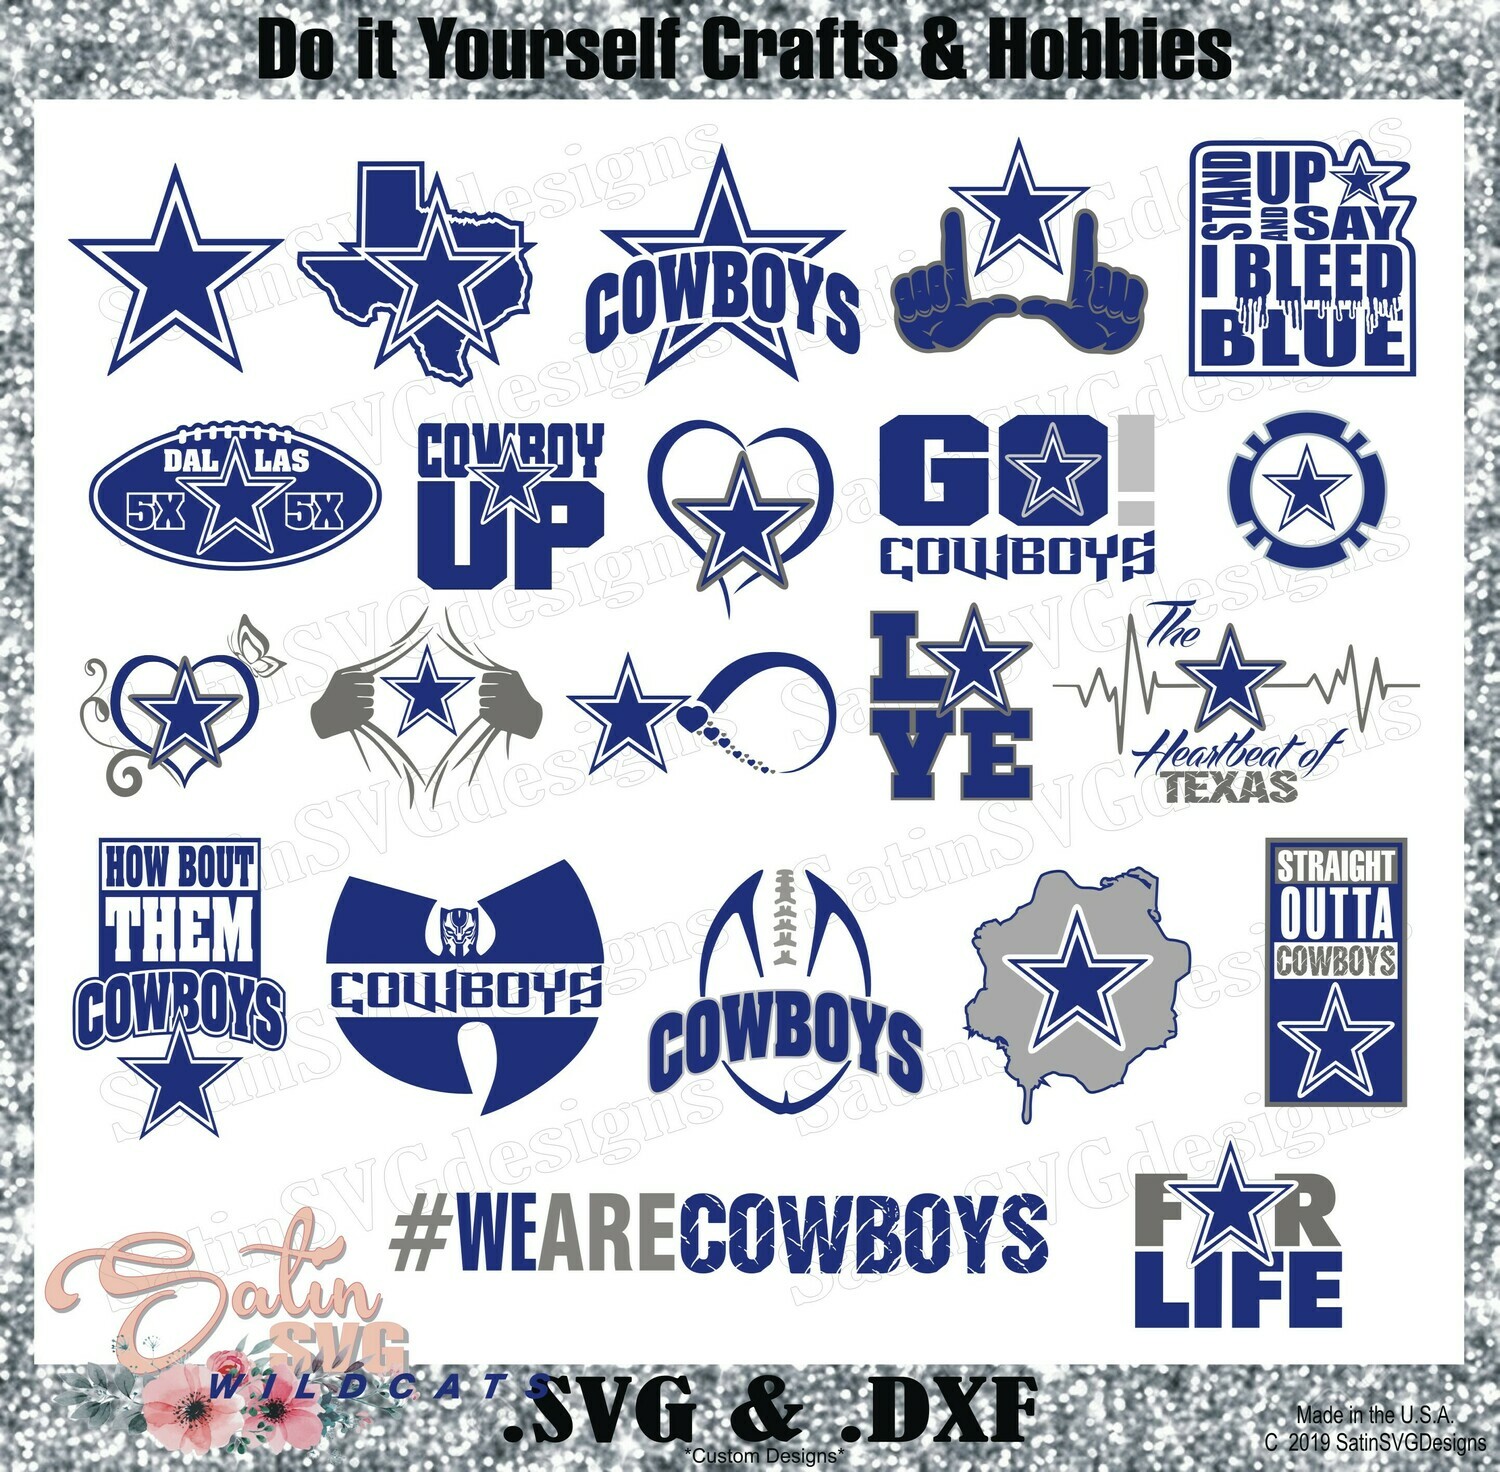 Dallas cowboys Svg, cowboys Svg. Vector Cut file Cricut, Silhouette, Pdf  Png, Dxf, Decal, Sticker, Stencil, Vinyl.